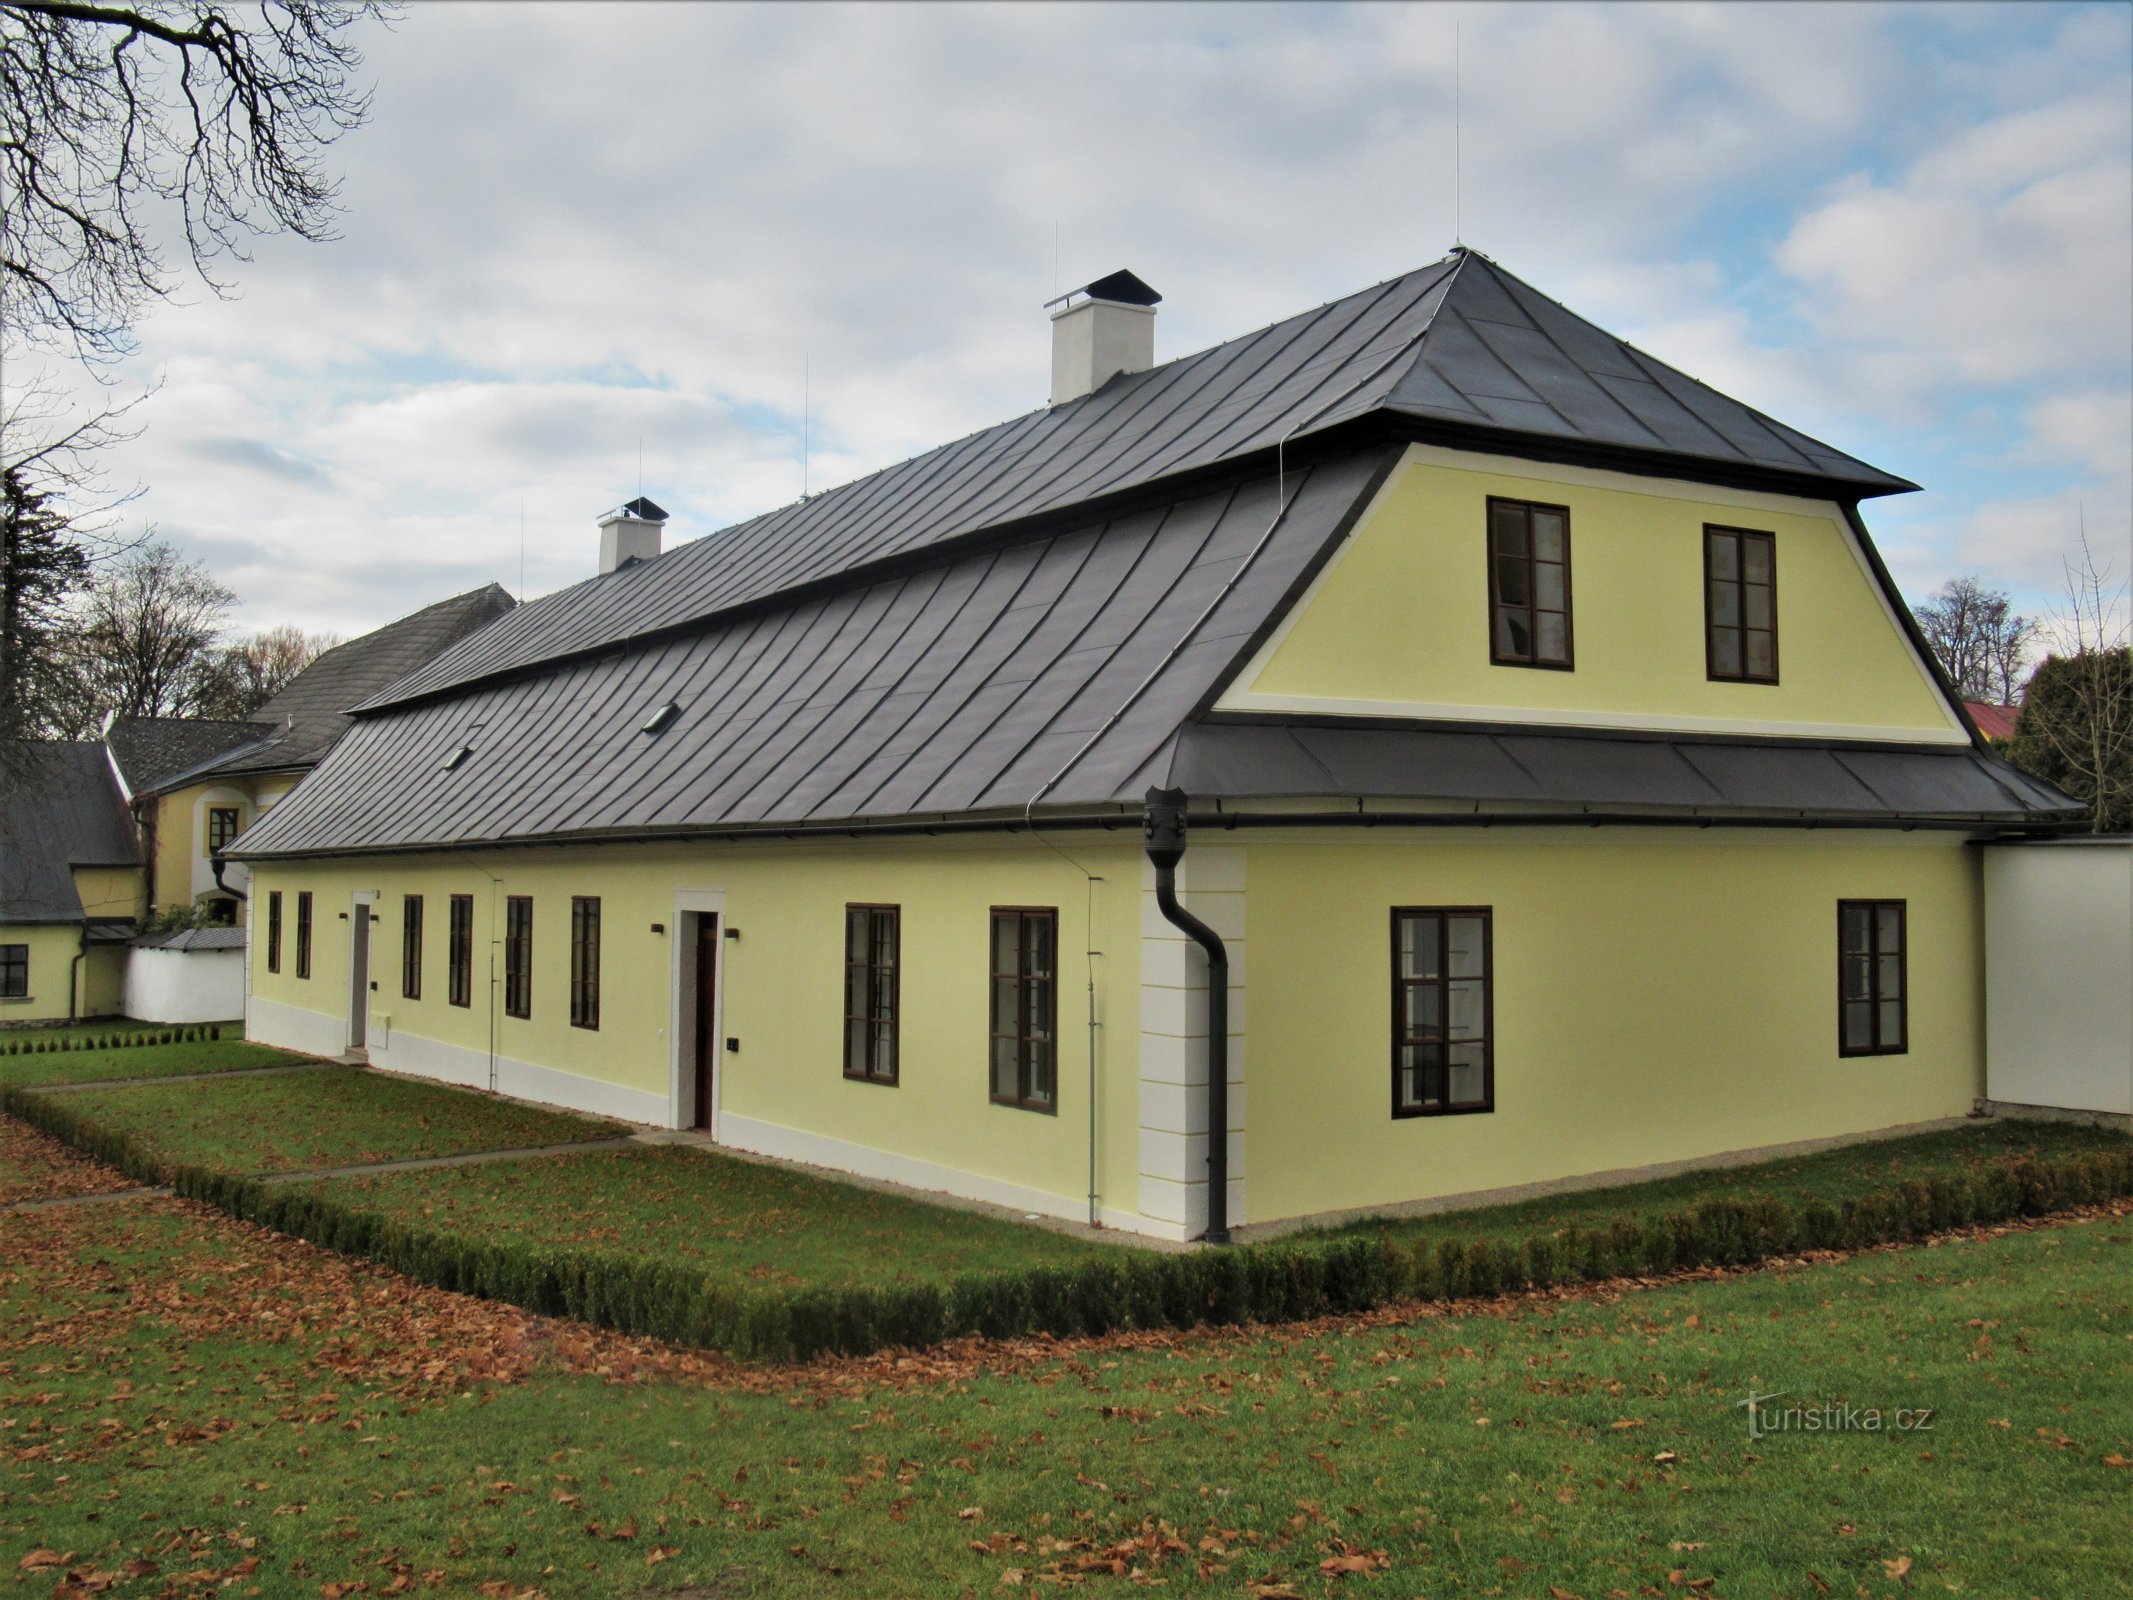 Žďár nad Sázavou - the gardener's house near the castle